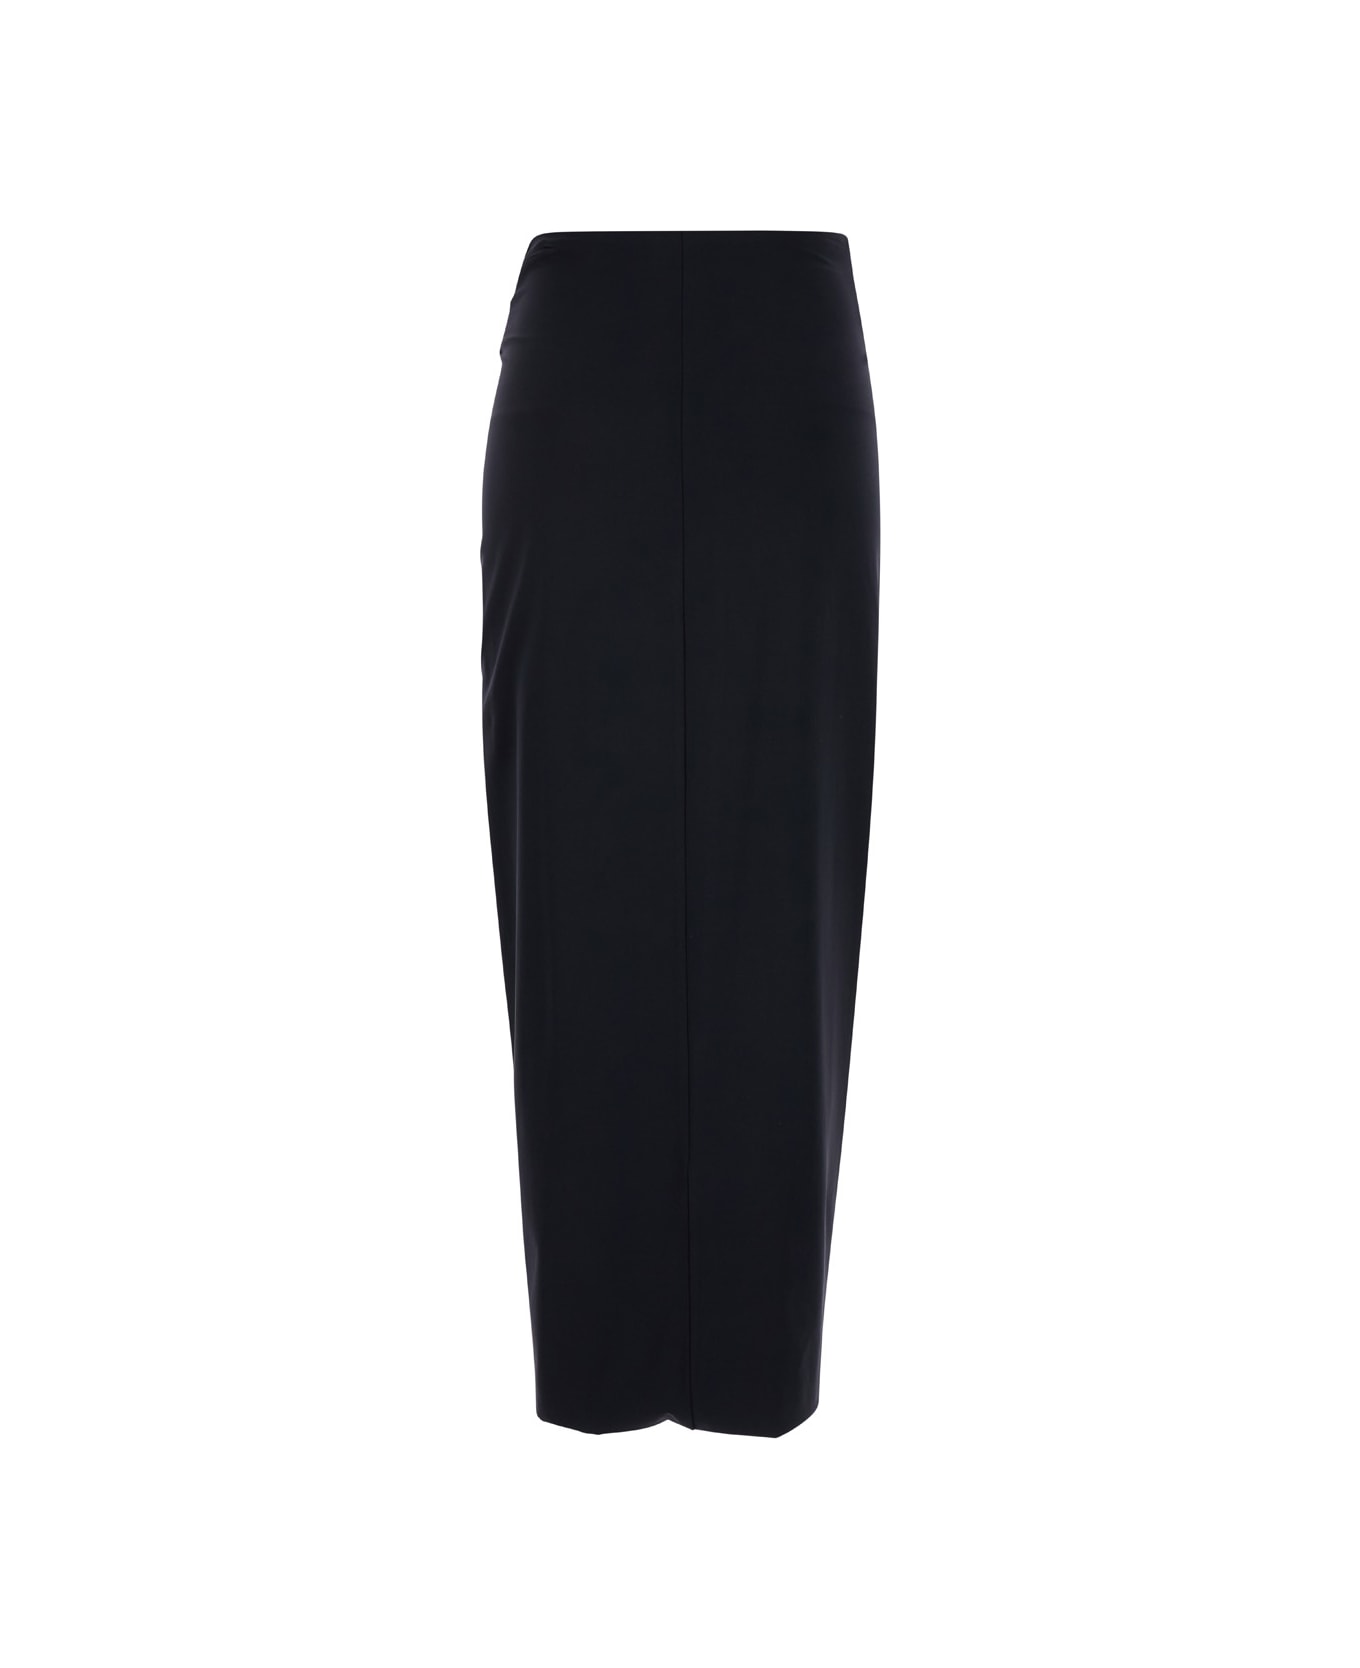 Federica Tosi Black Wrinkled Long Skirt In Techno Fabric Stretch Woman - Black スカート